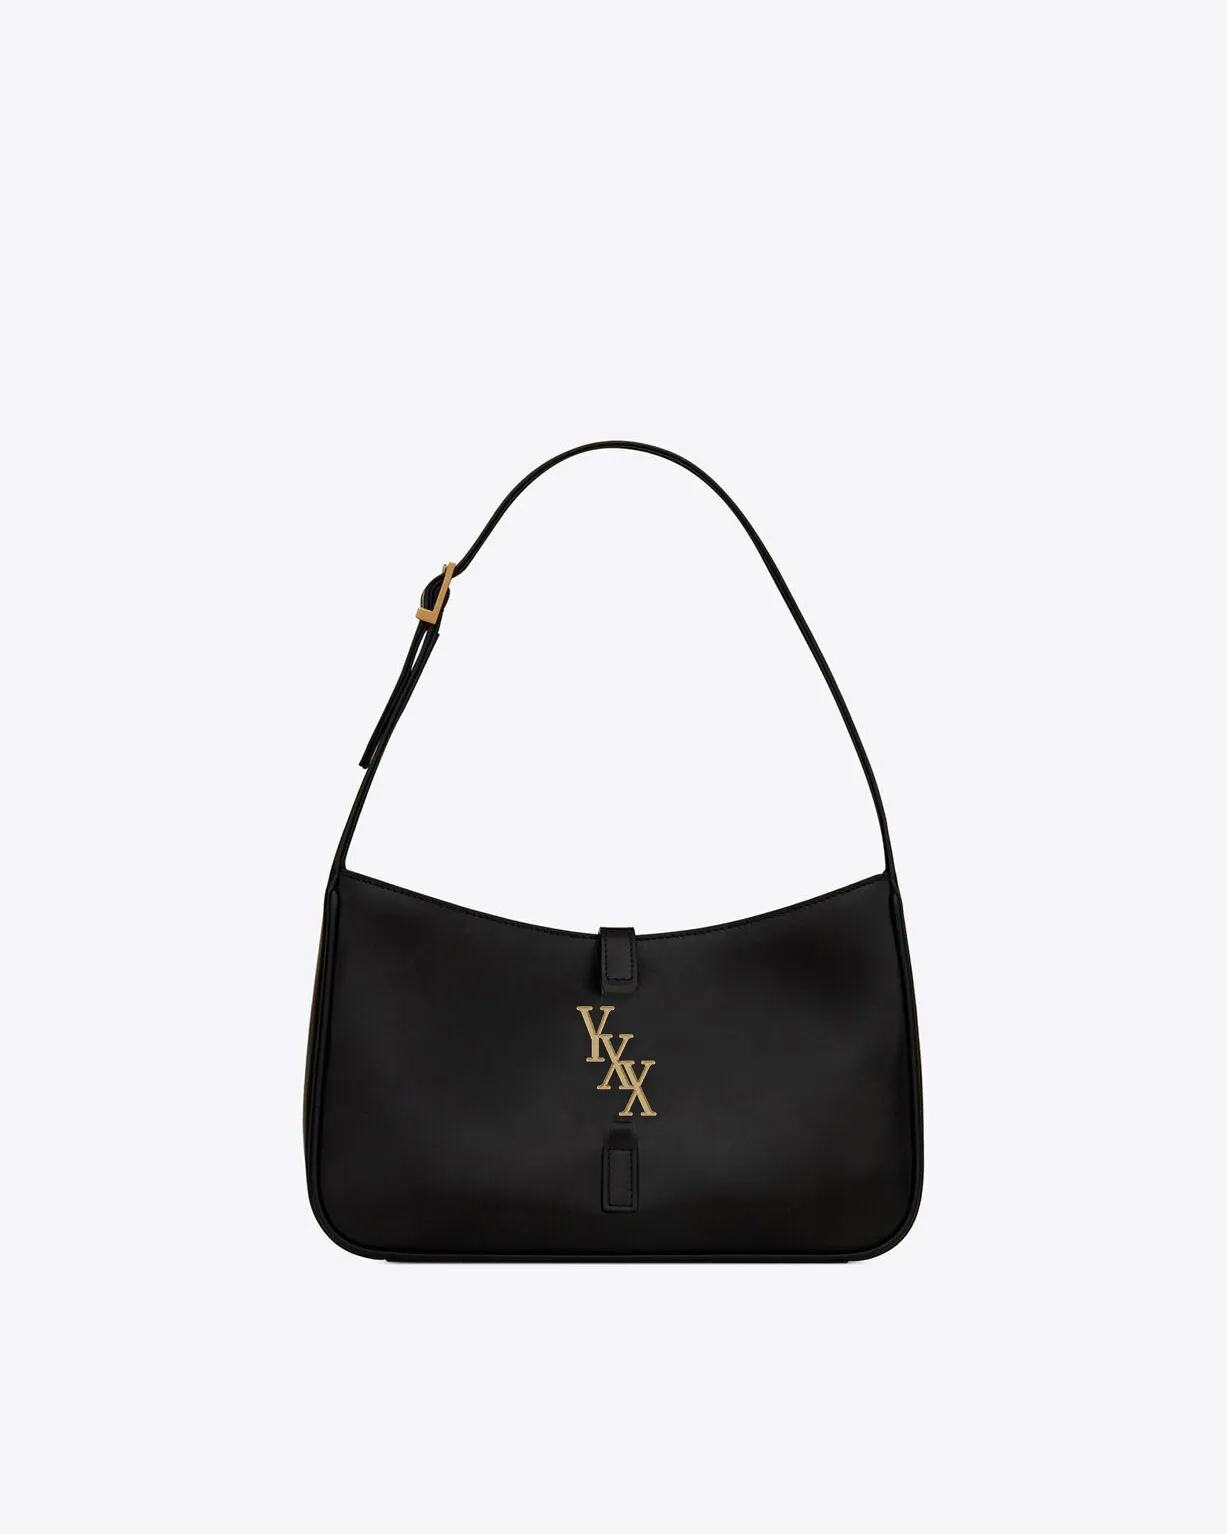 Underarm handbag LE5A7 series gold logo cow leather wandering bag single shoulder bag women's small cute bag